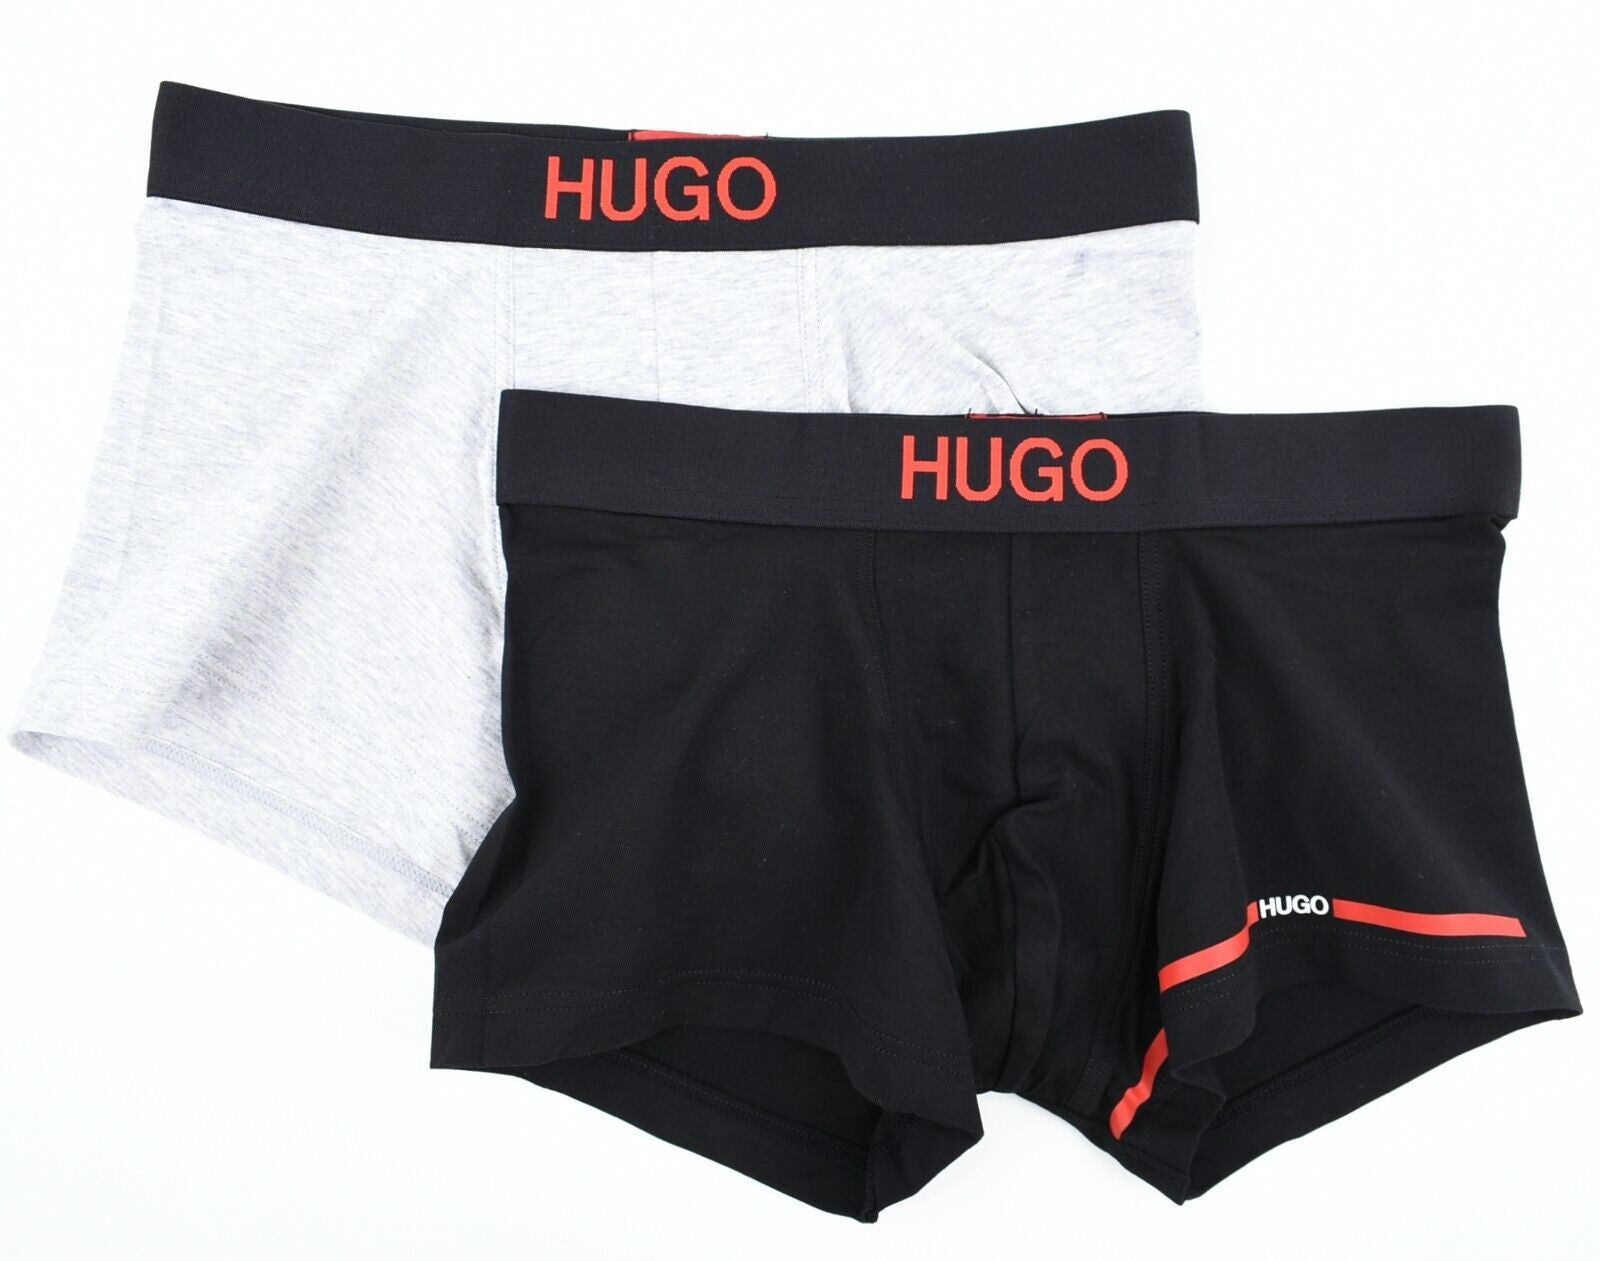 HUGO BOSS Underwear: Men's 2-Pack Low Rise Boxer Trunks, Black/Grey, size S